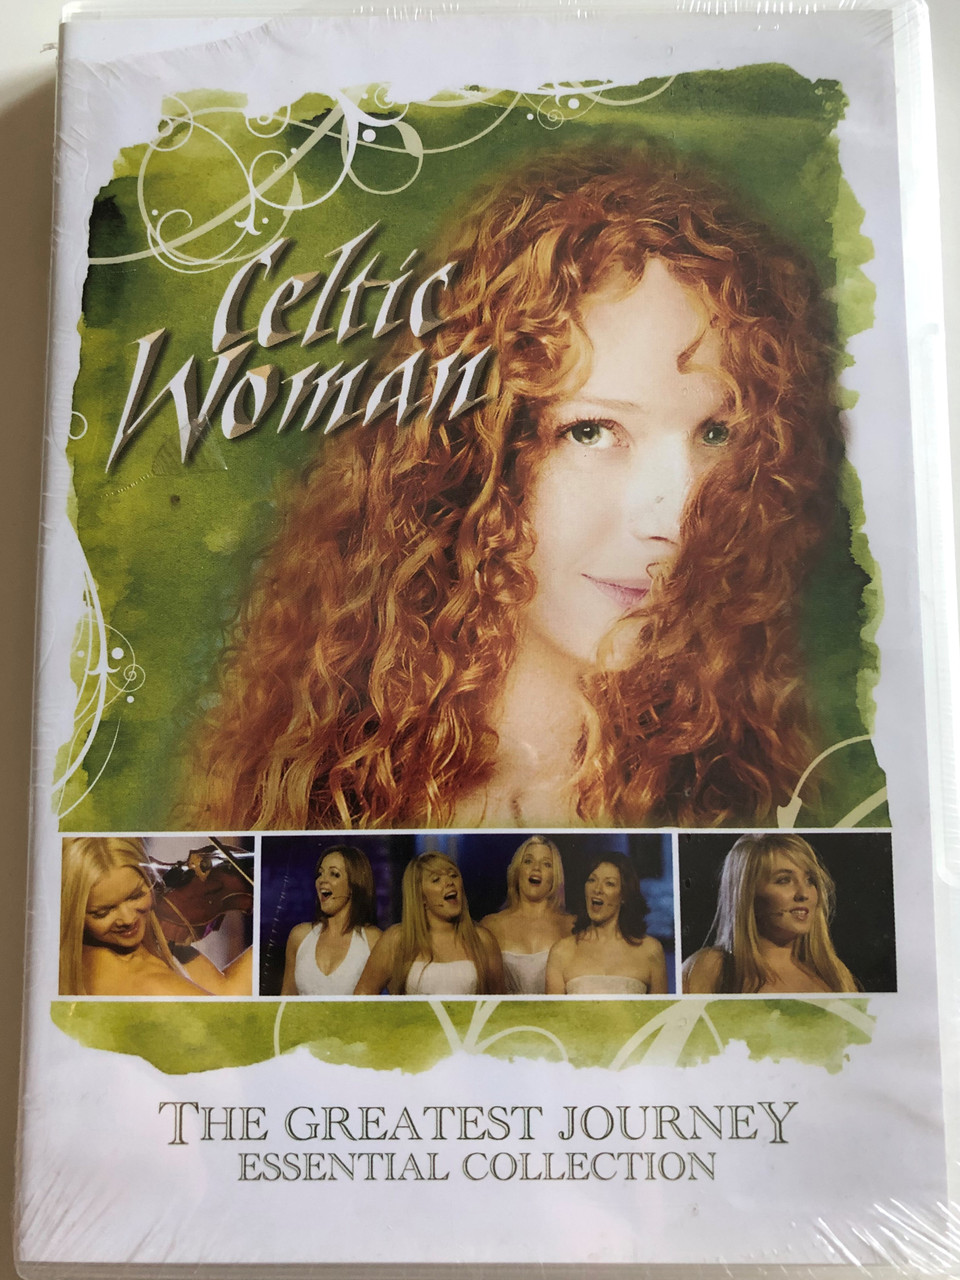 Celtic Woman The Greatest Journey Dvd 08 Essential Collection Manhattan Records Emi Bibleinmylanguage